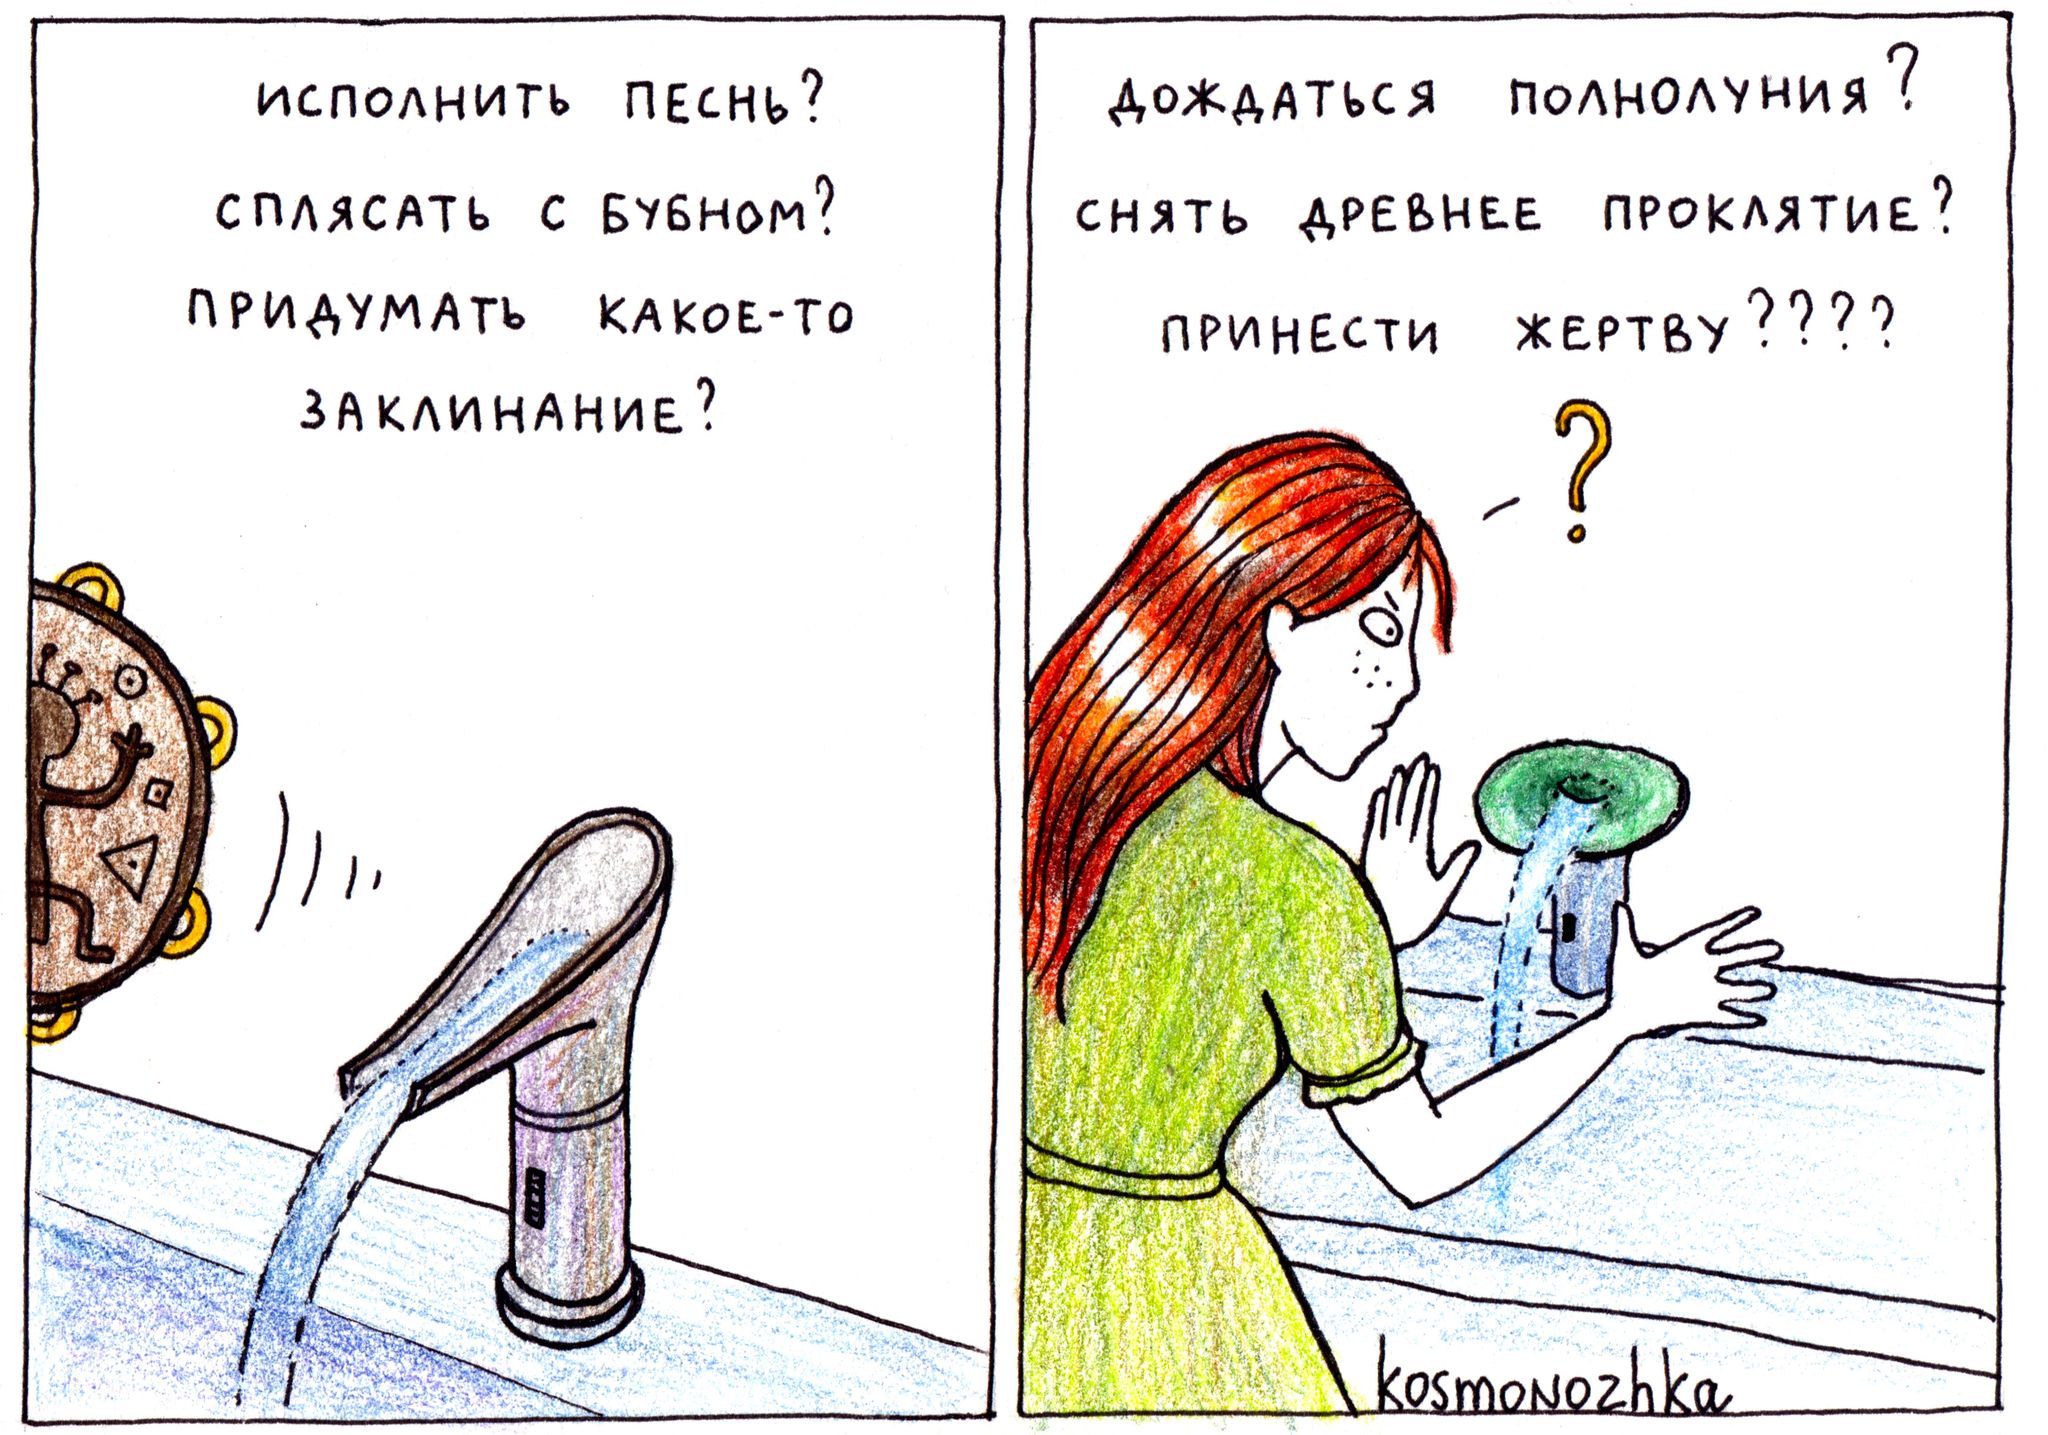 An engineering marvel - Comics, Kosmonozhka, Humor, Tap, Kosmonozhka, Longpost